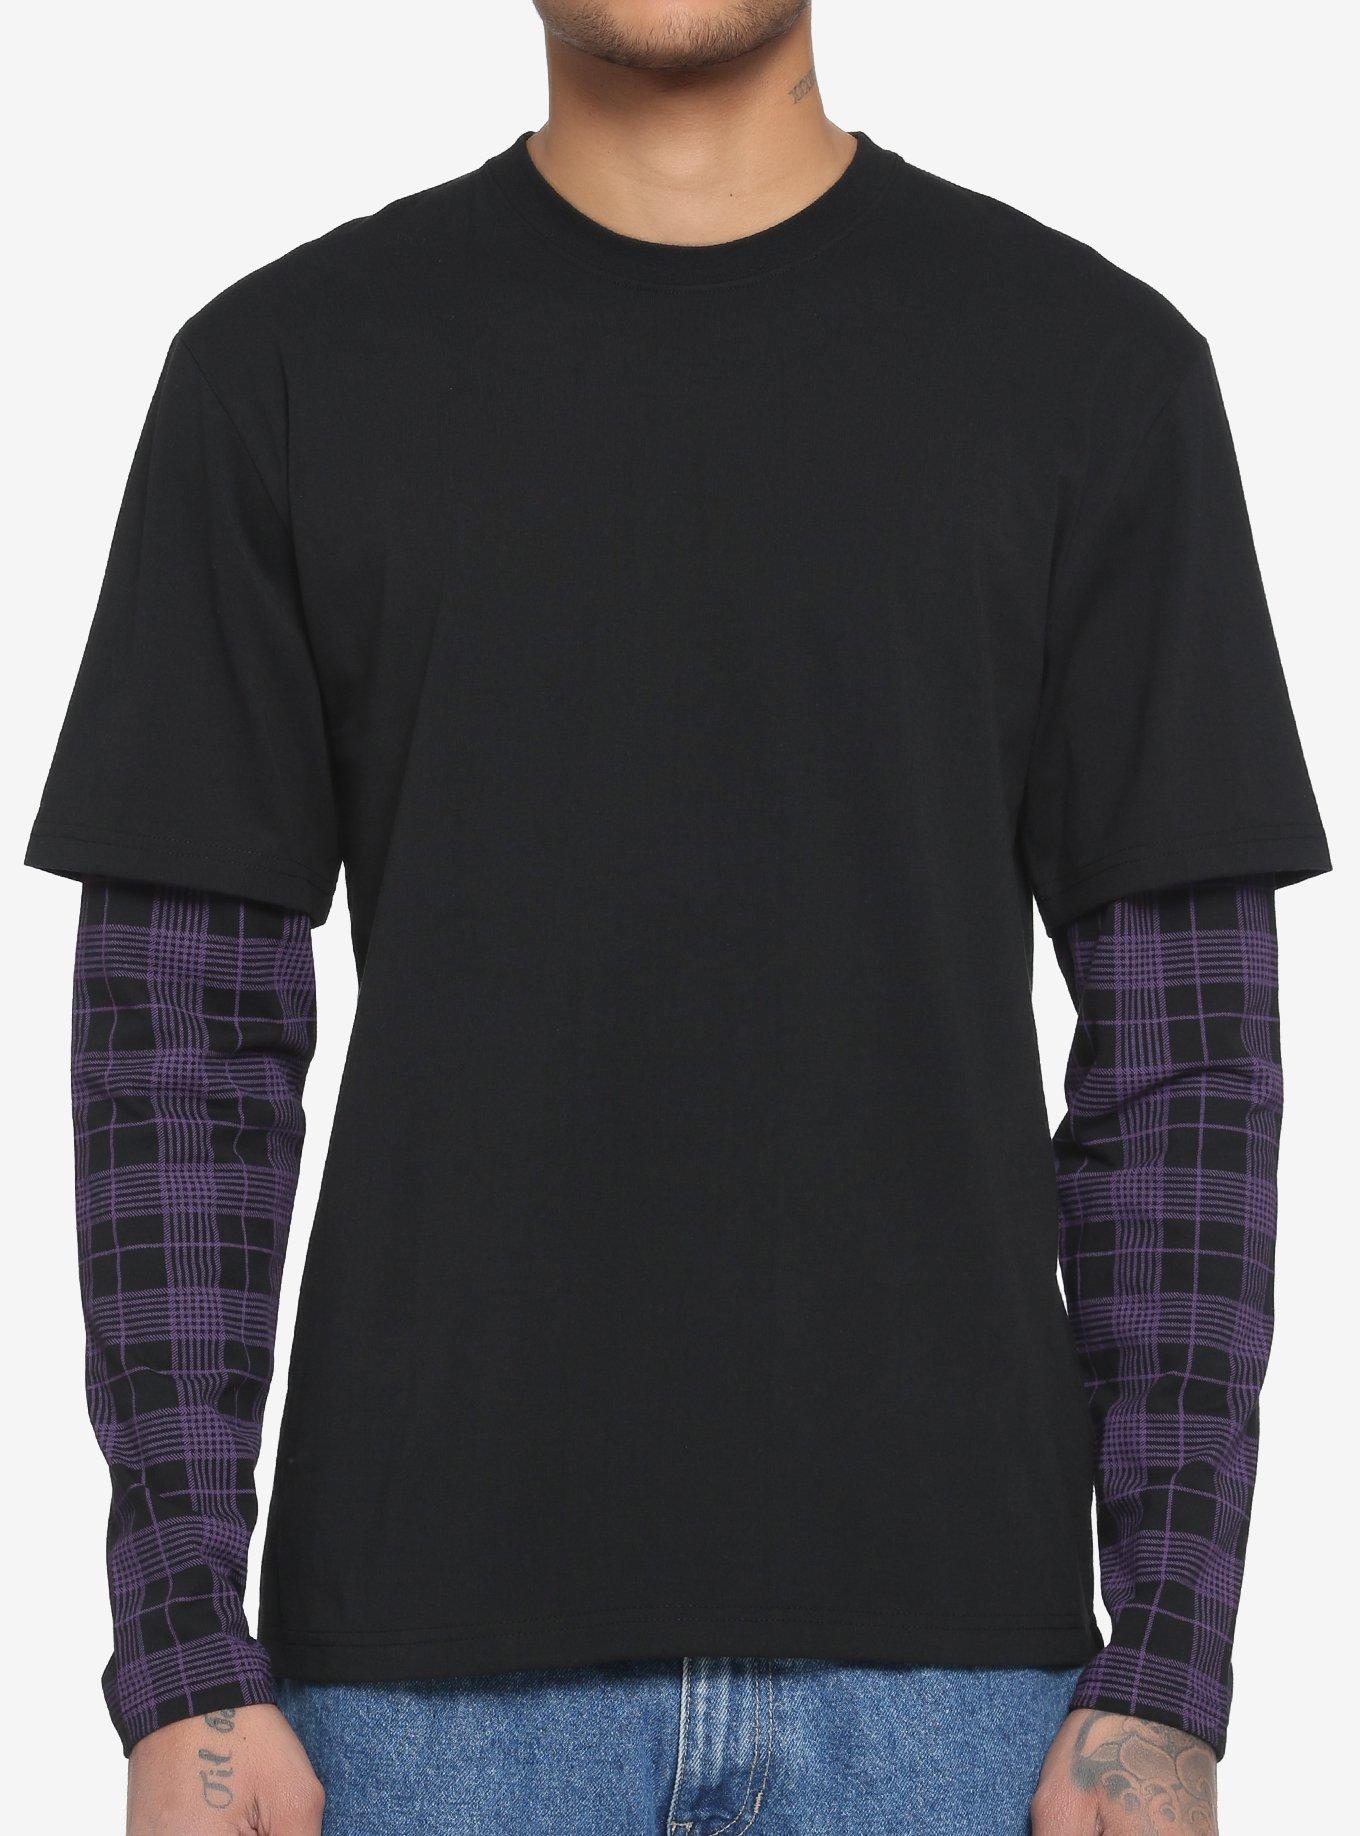 Black & Purple Plaid Sleeve Twofer Long-Sleeve T-Shirt, BLACK  PURPLE, hi-res